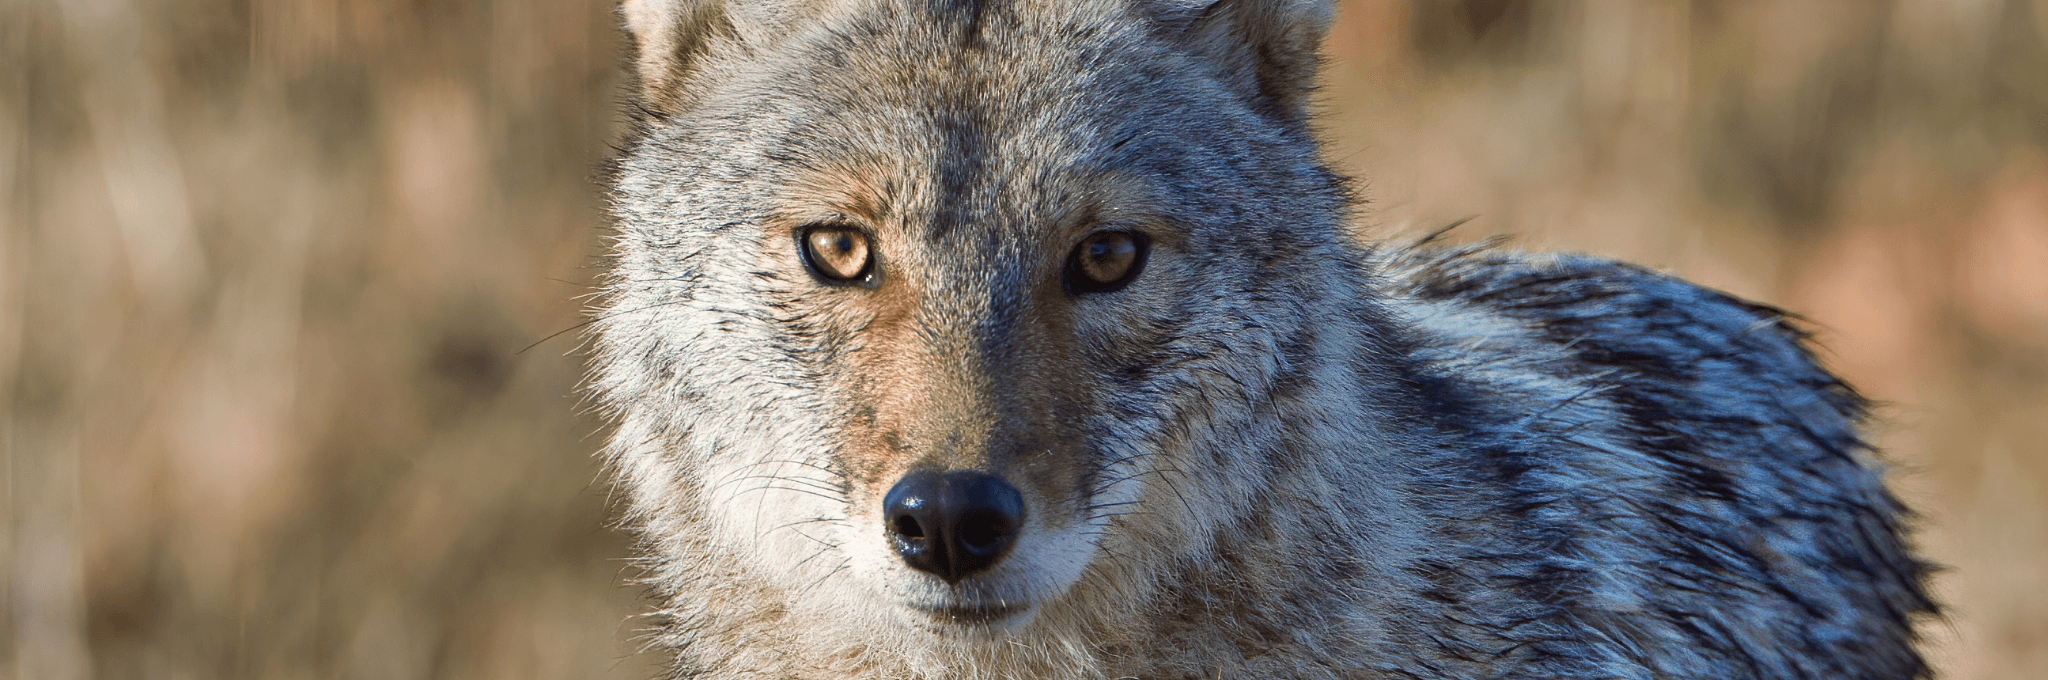 Predator Guard coyote in grasslands